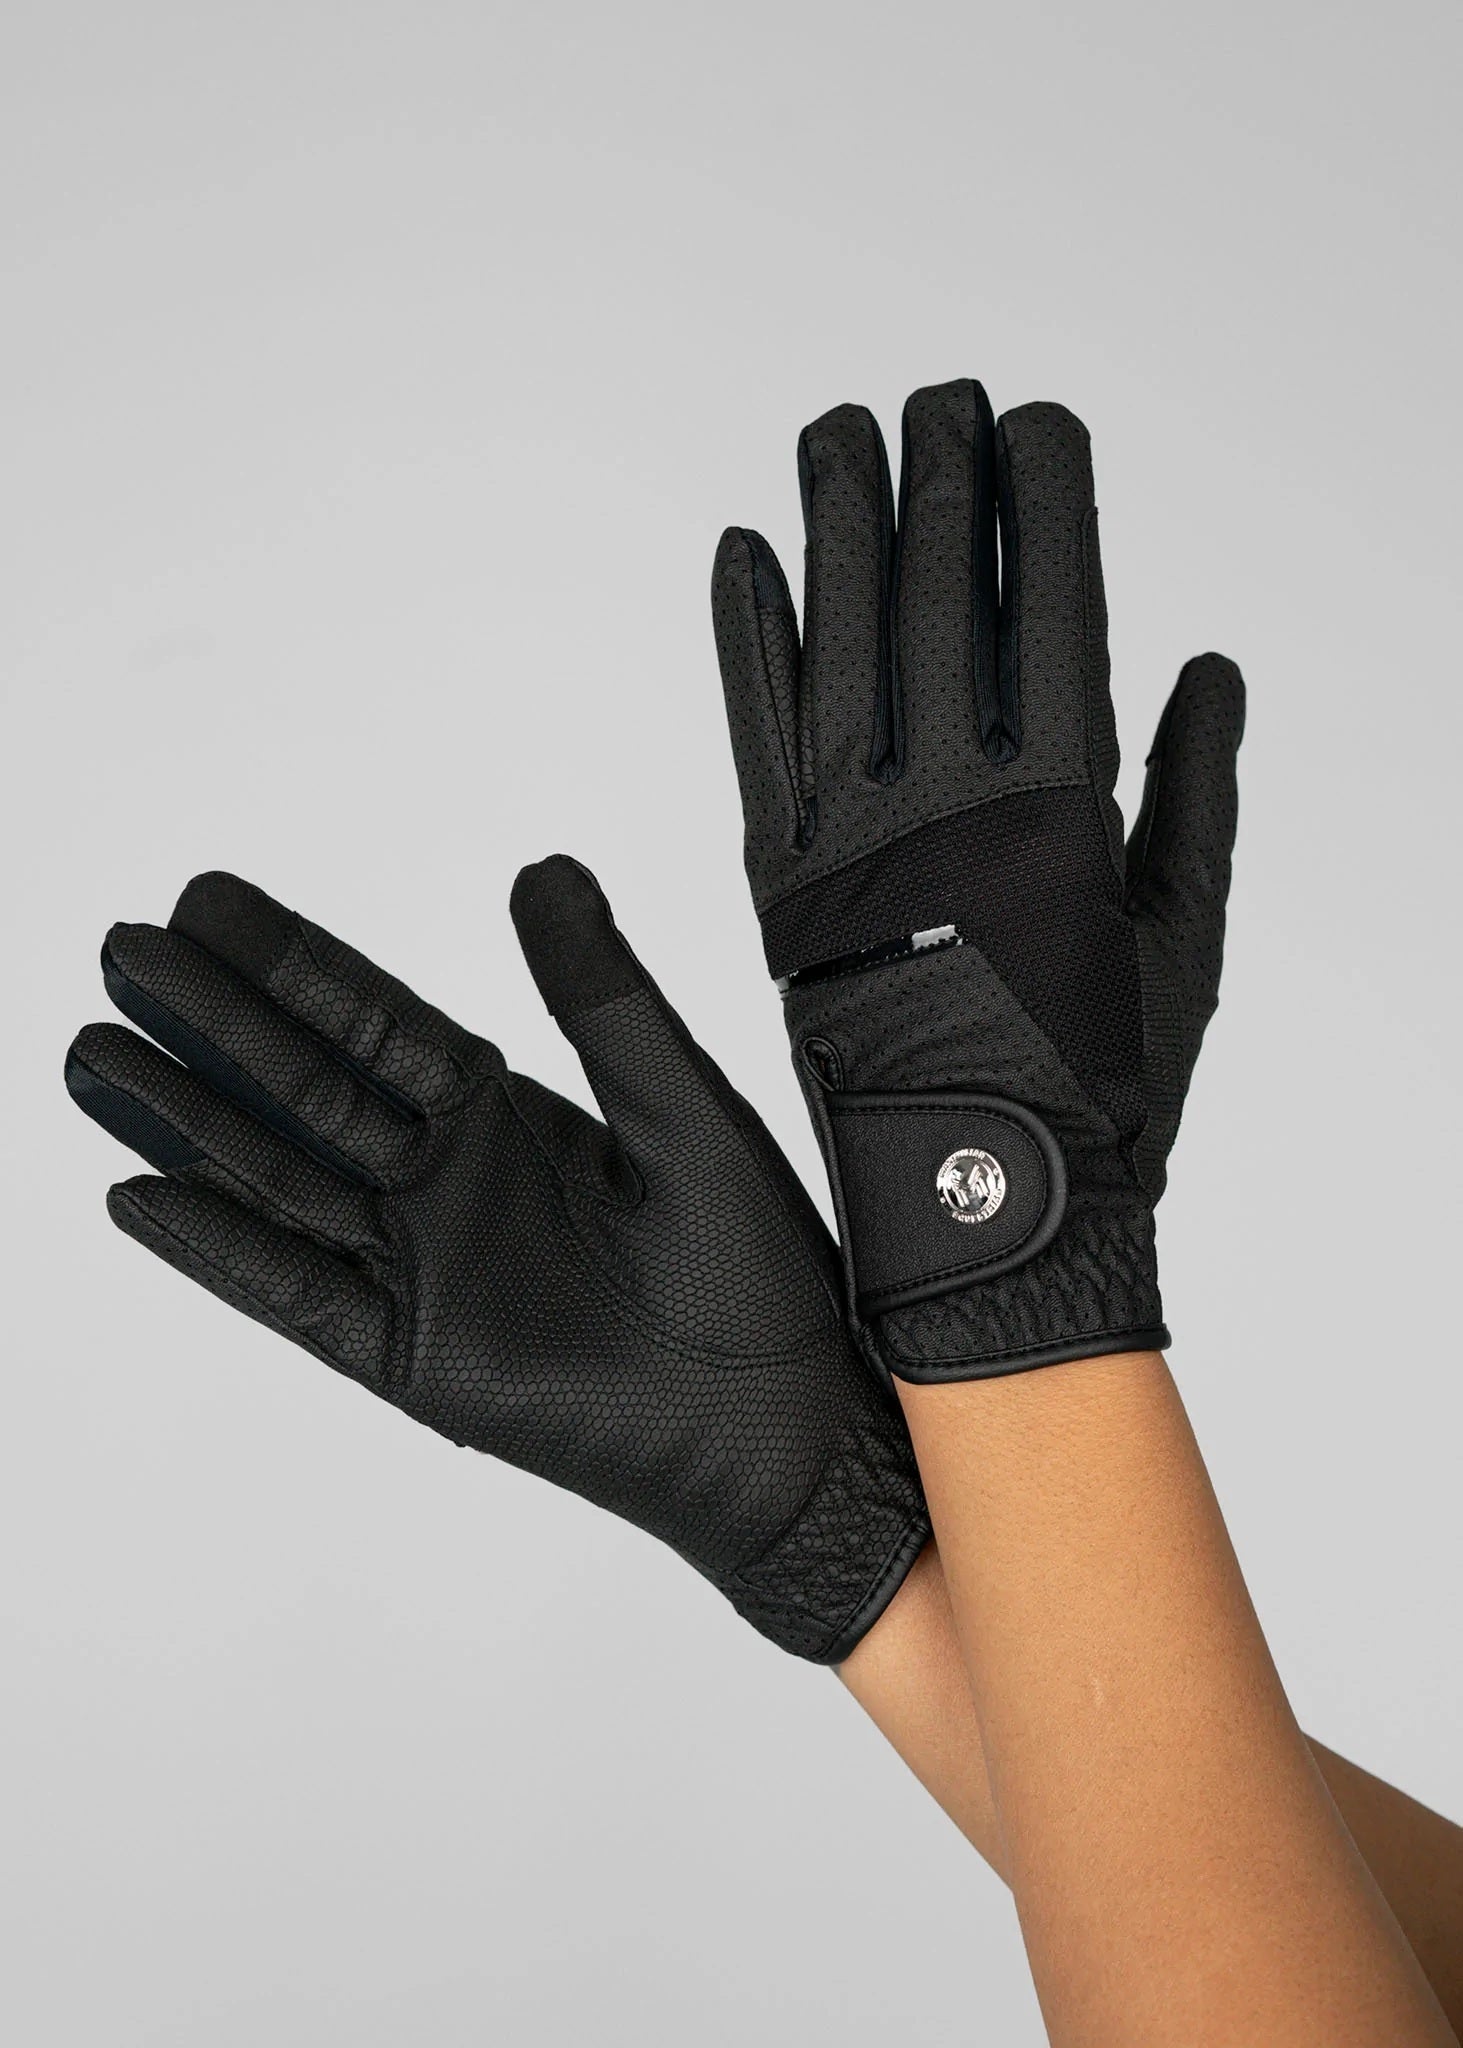 Max Riding Gloves - Black